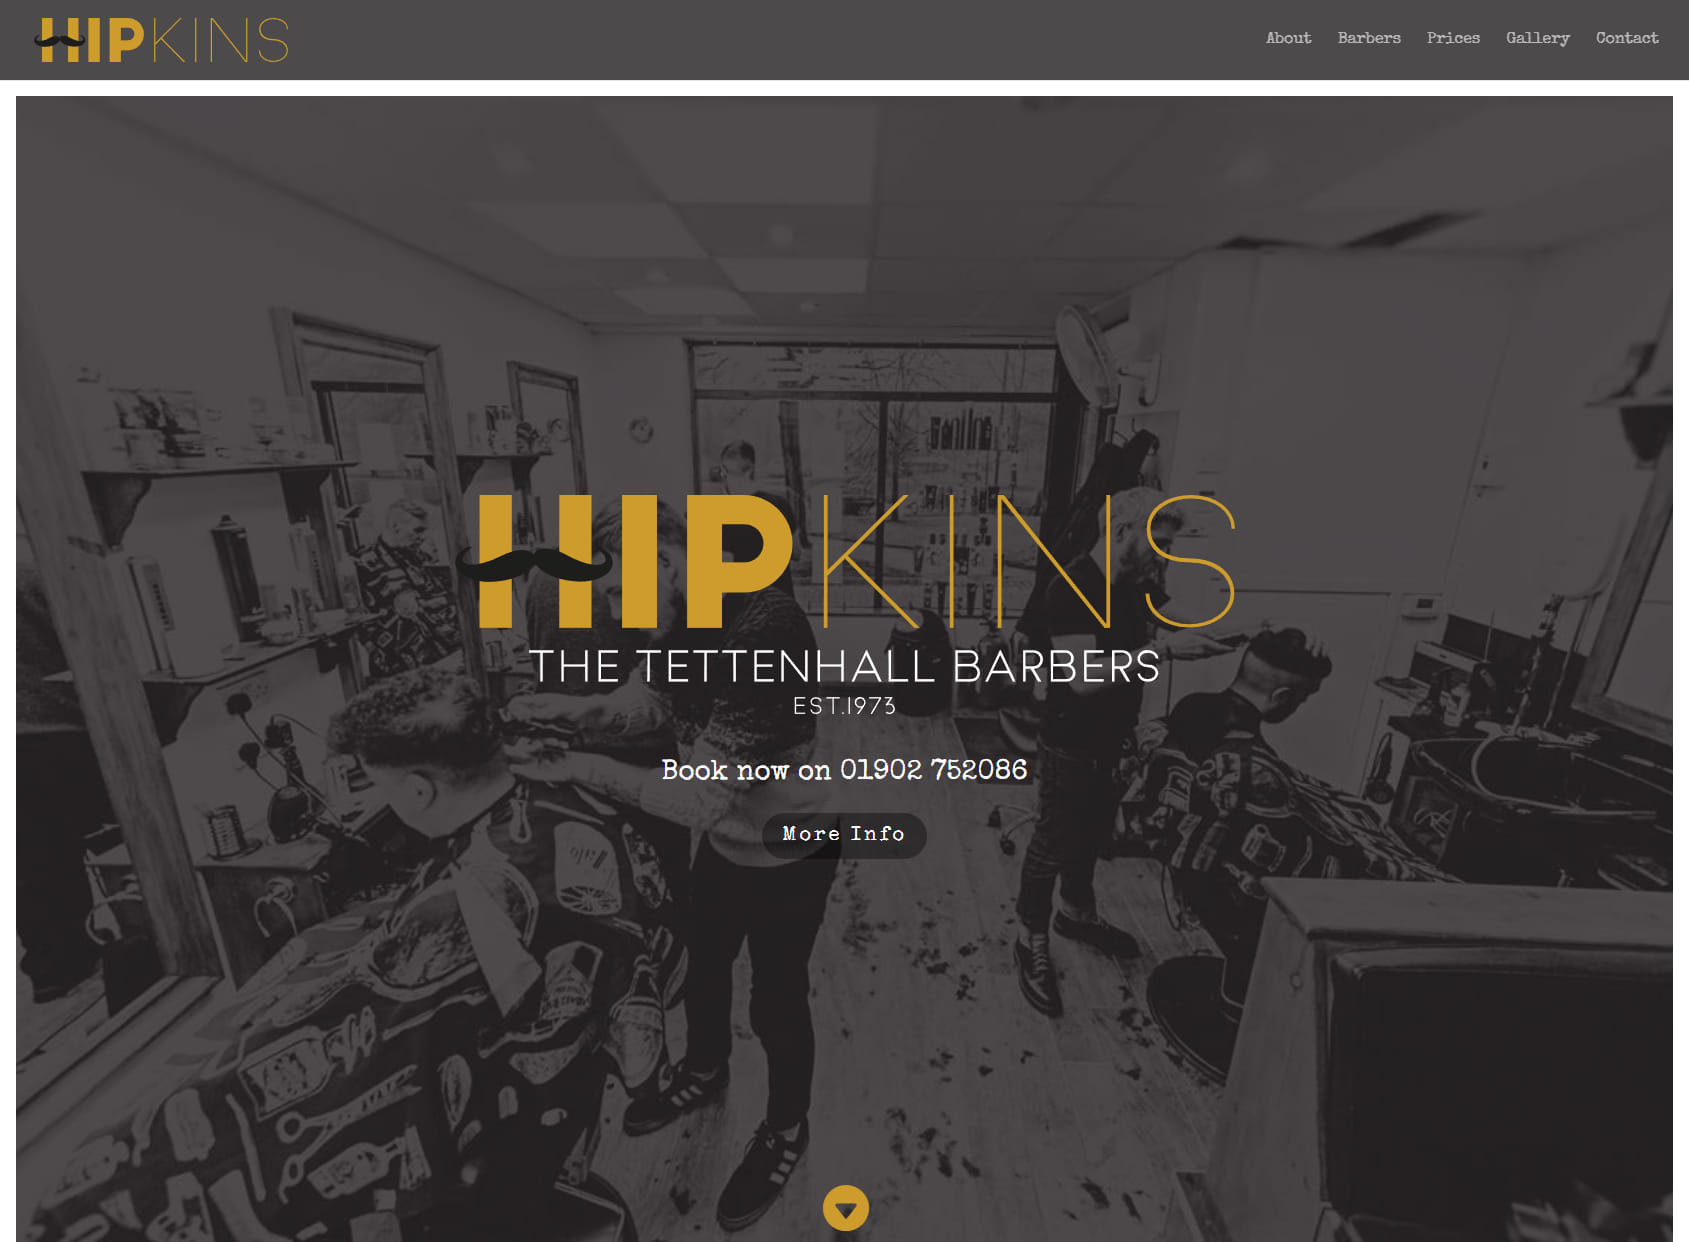 'Hipkins' The Tettenhall Barbers